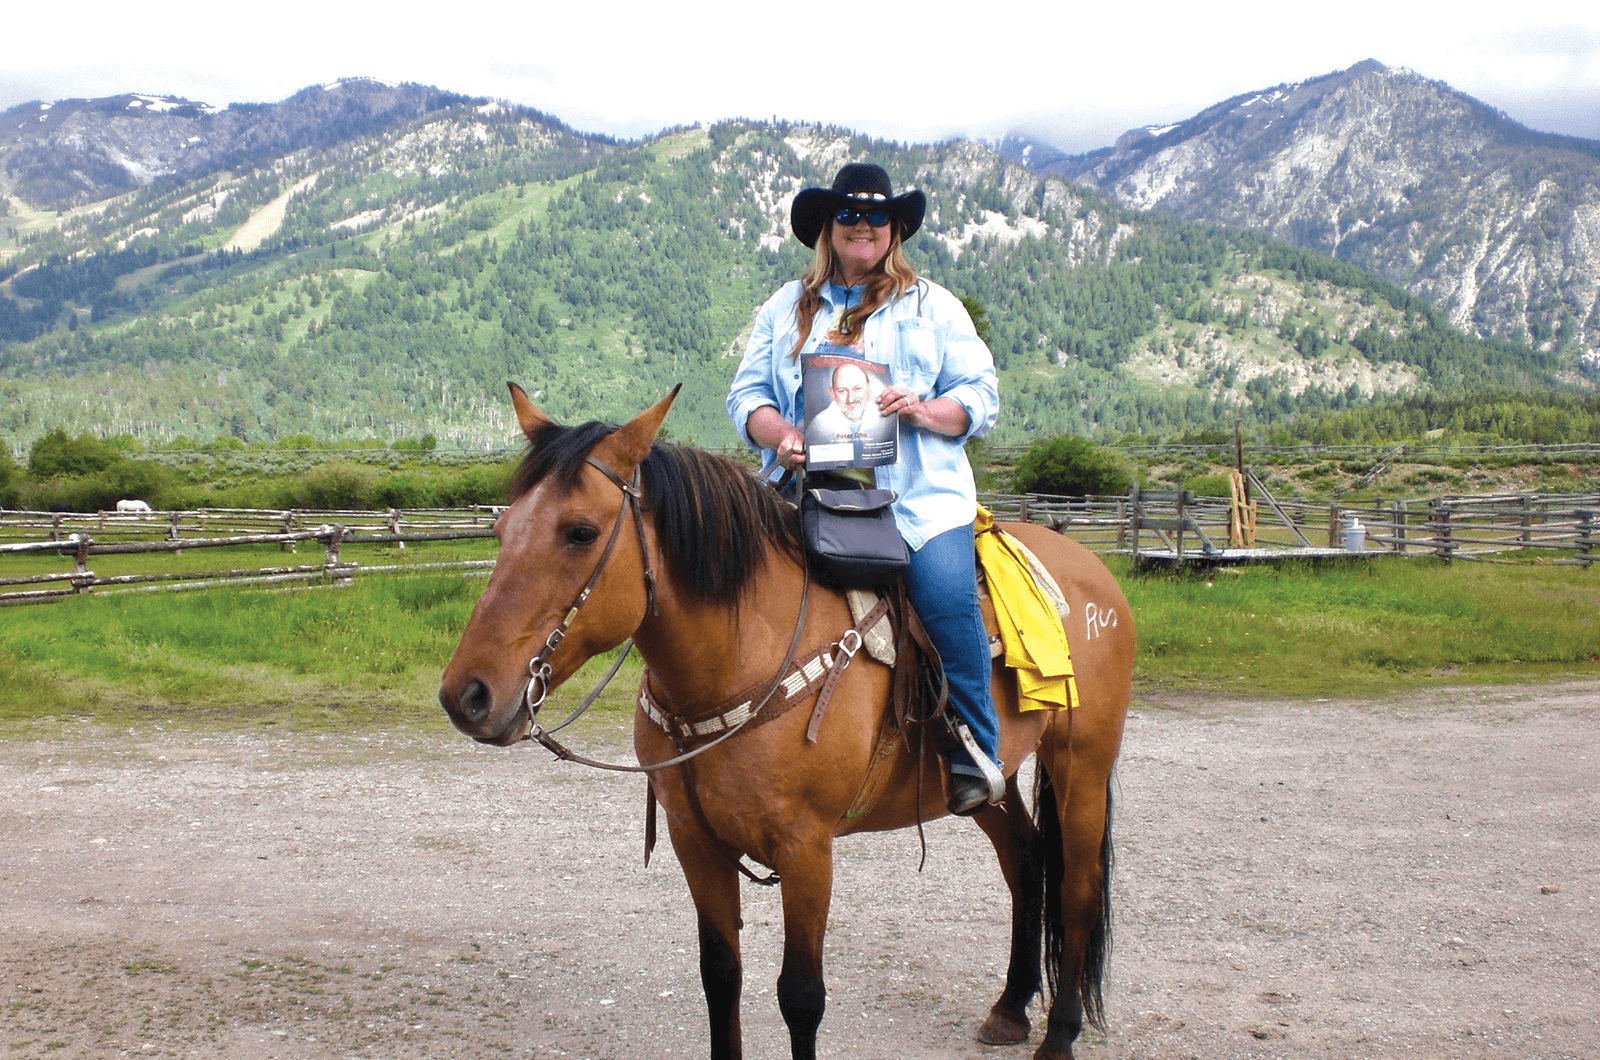 Michelle Brown, DTM, of Albany, New York, enjoys horseback riding near the Grand Teton Mountain Range in Jackson, Wyoming.